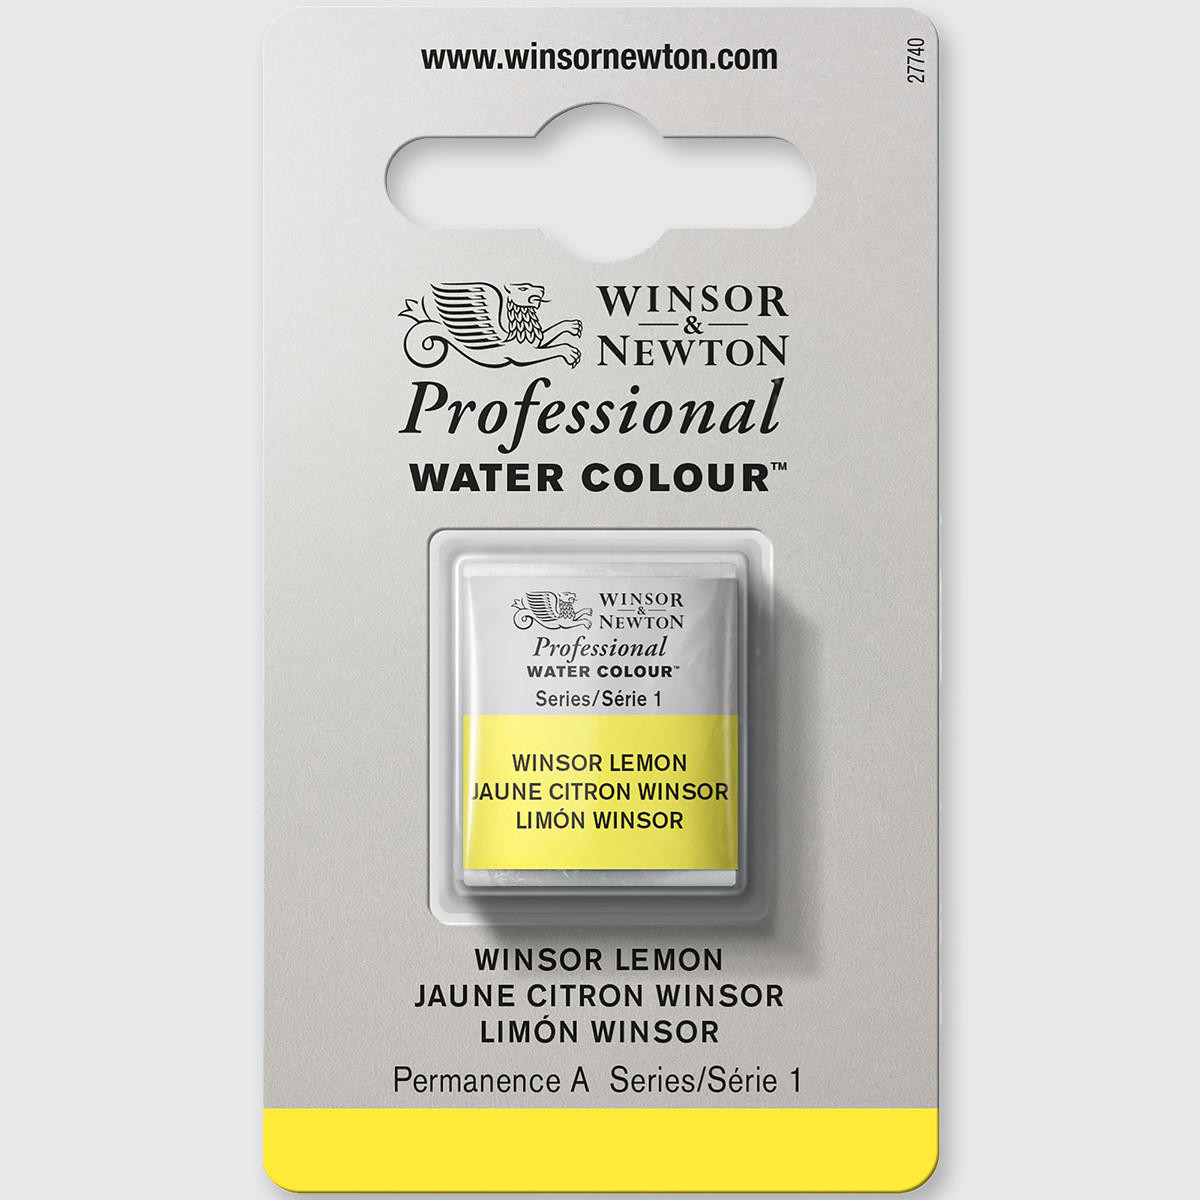 Winsor & Newton Professional Water Colour Half Pan Winsor Lemon